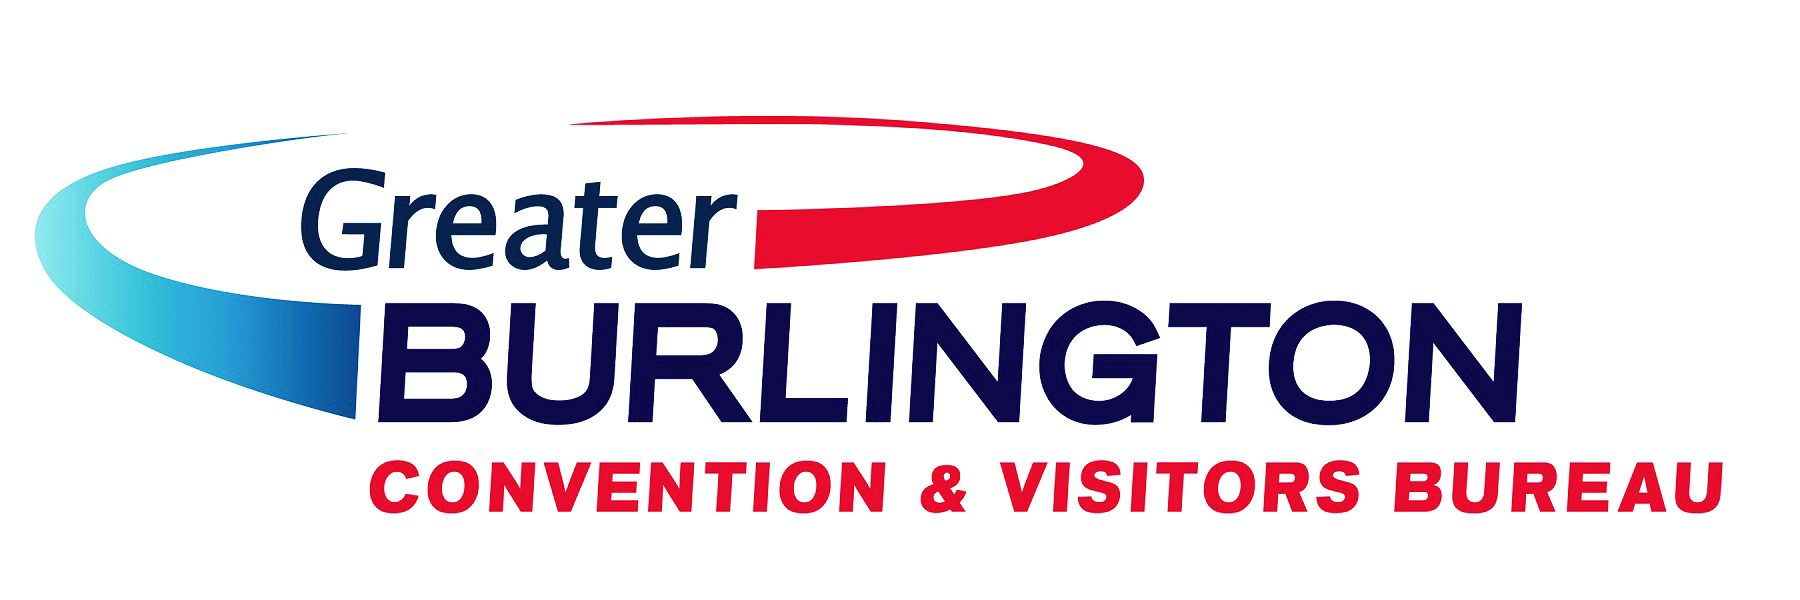 Greater Burlington Convention & Visitors Bureau